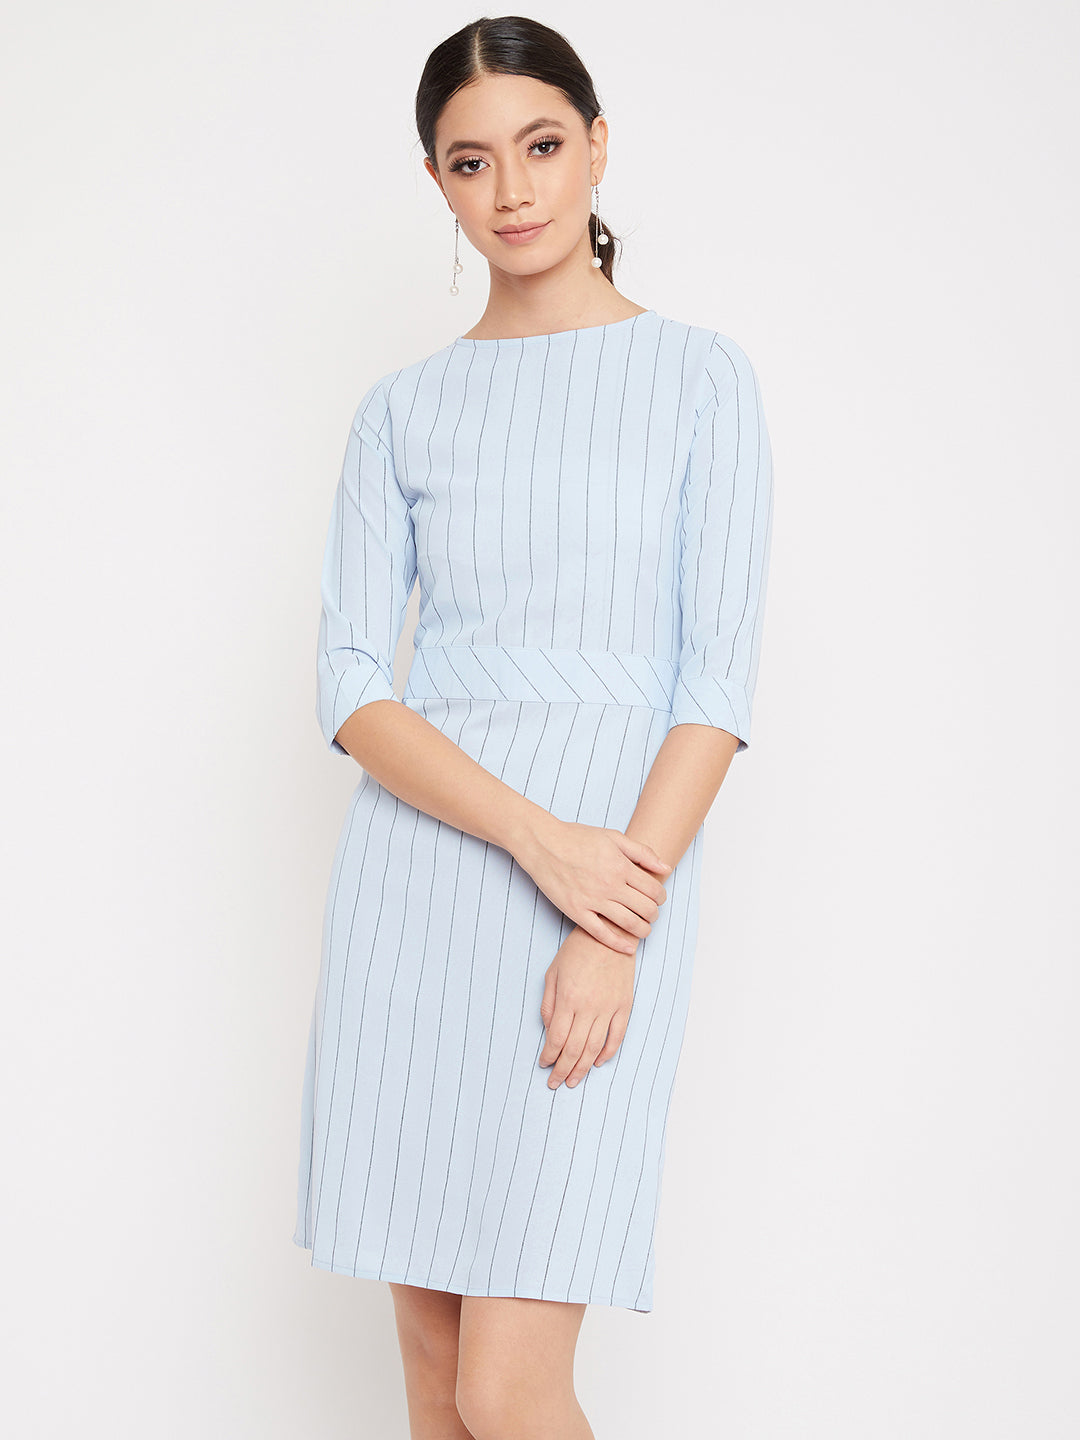 Blue Striped Dress - Women Dresses